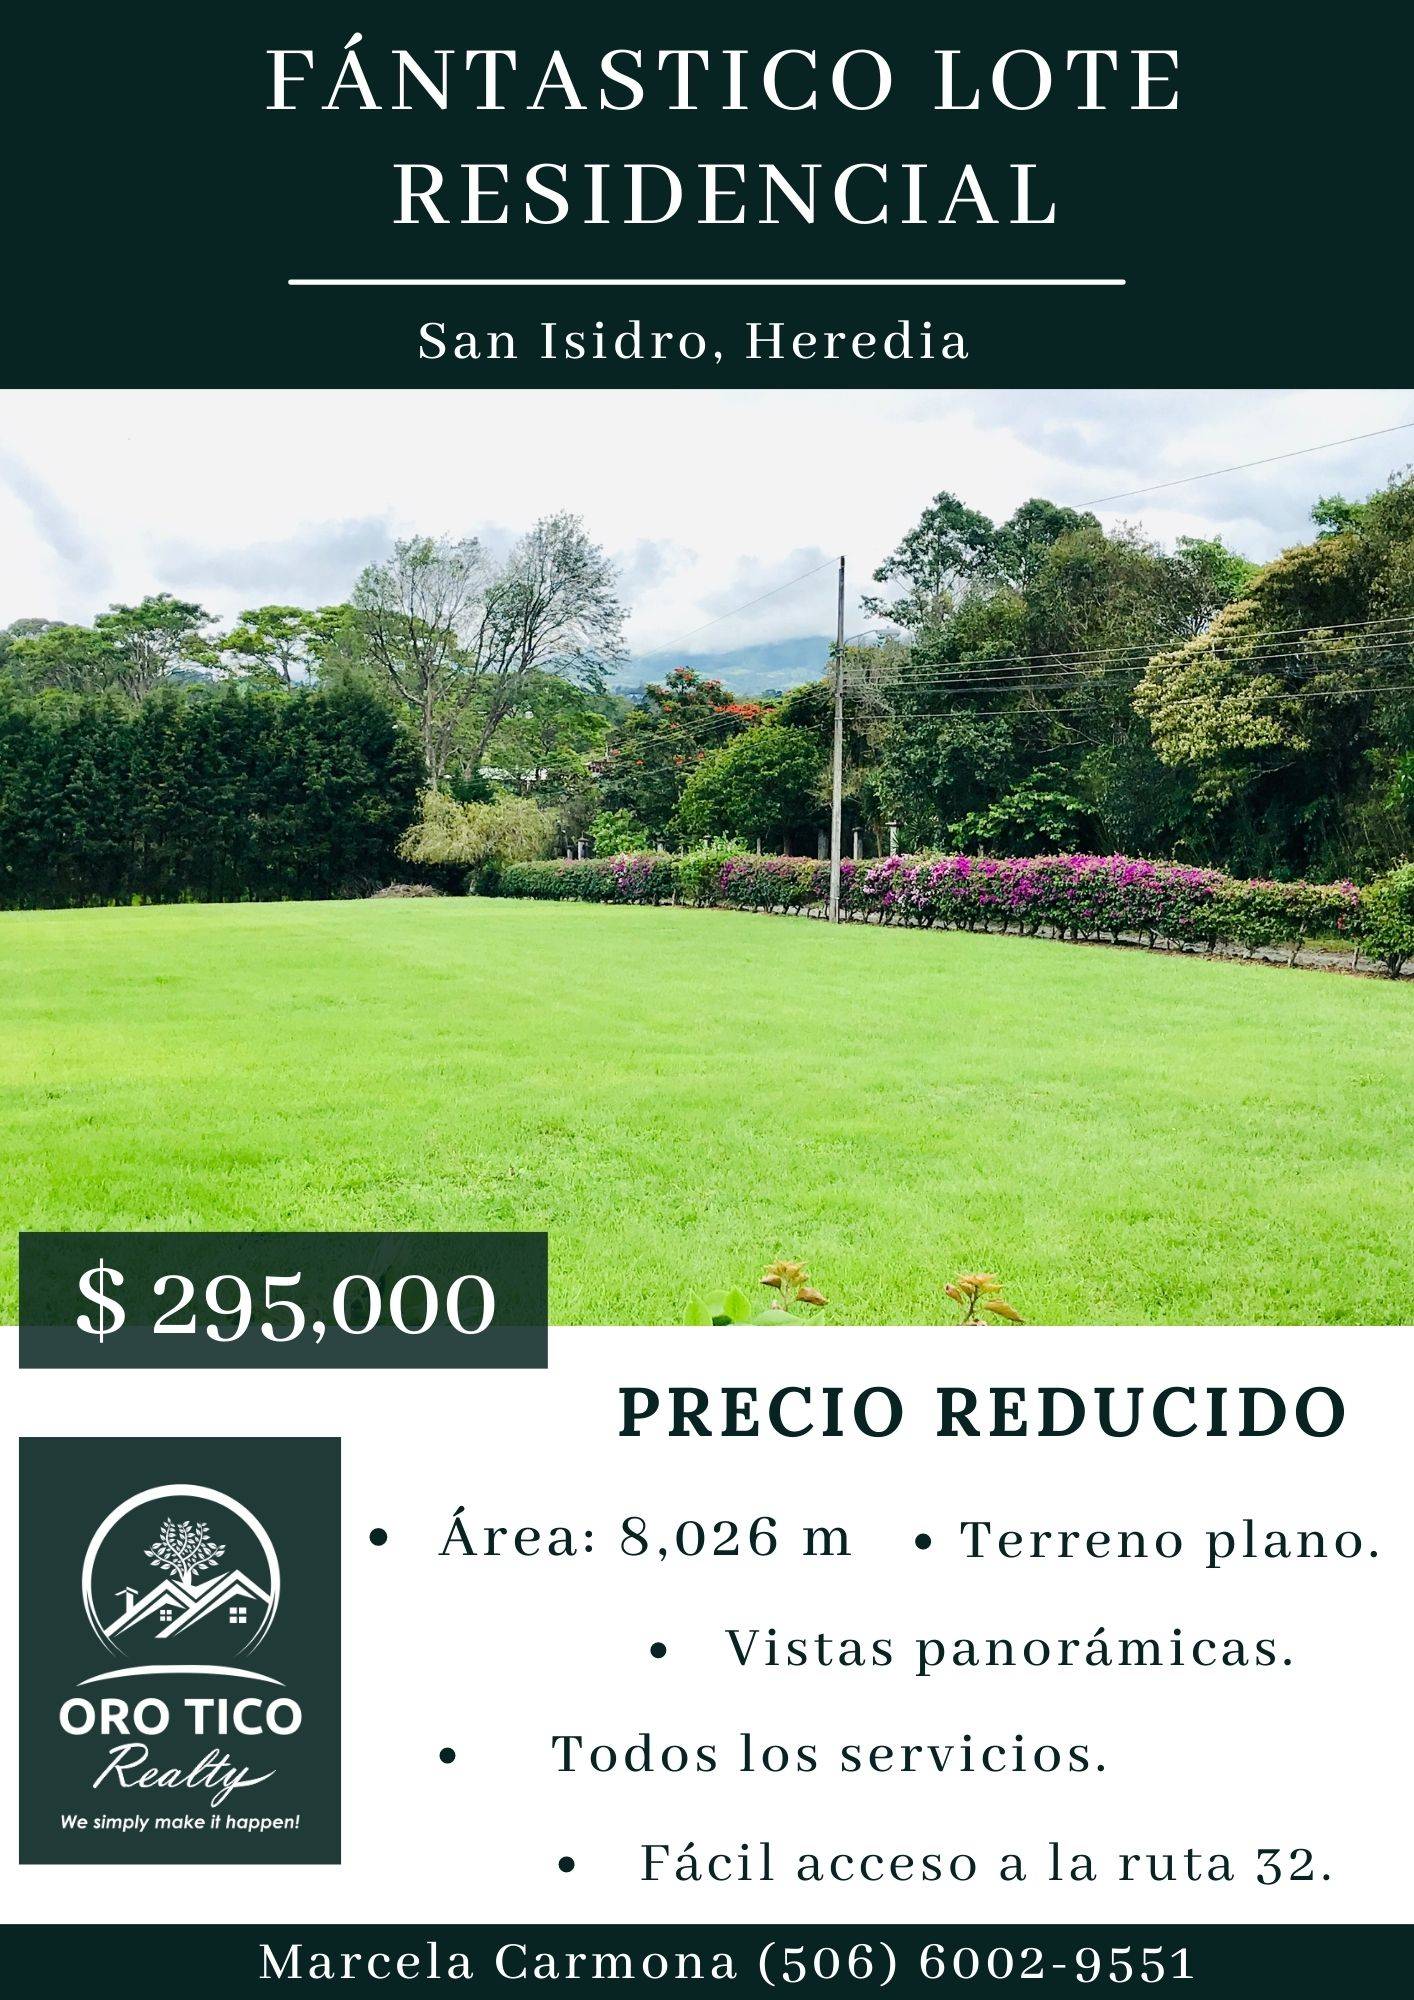 For-Sale-En-Venta-Residencial-Lot-Lote-San-Isidro-Heredia-Oro-Tico-Realty.